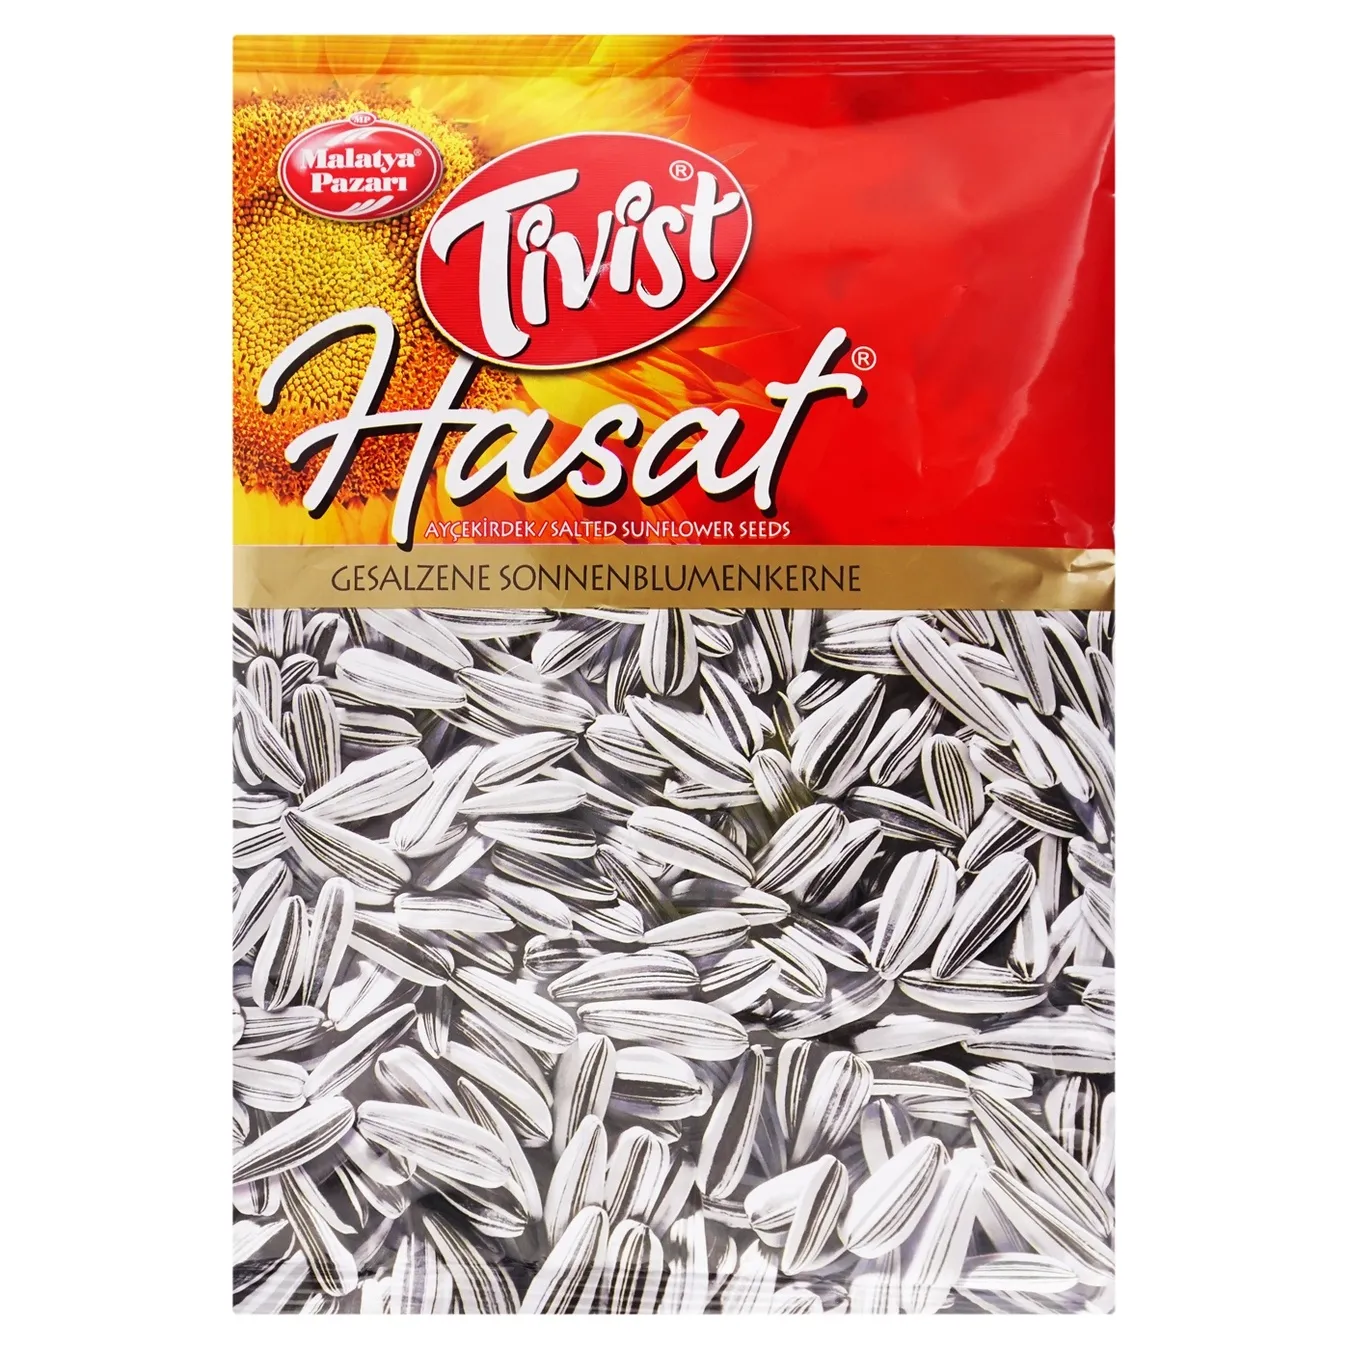 Tivist Hasat lightly salted sunflower seeds 200g